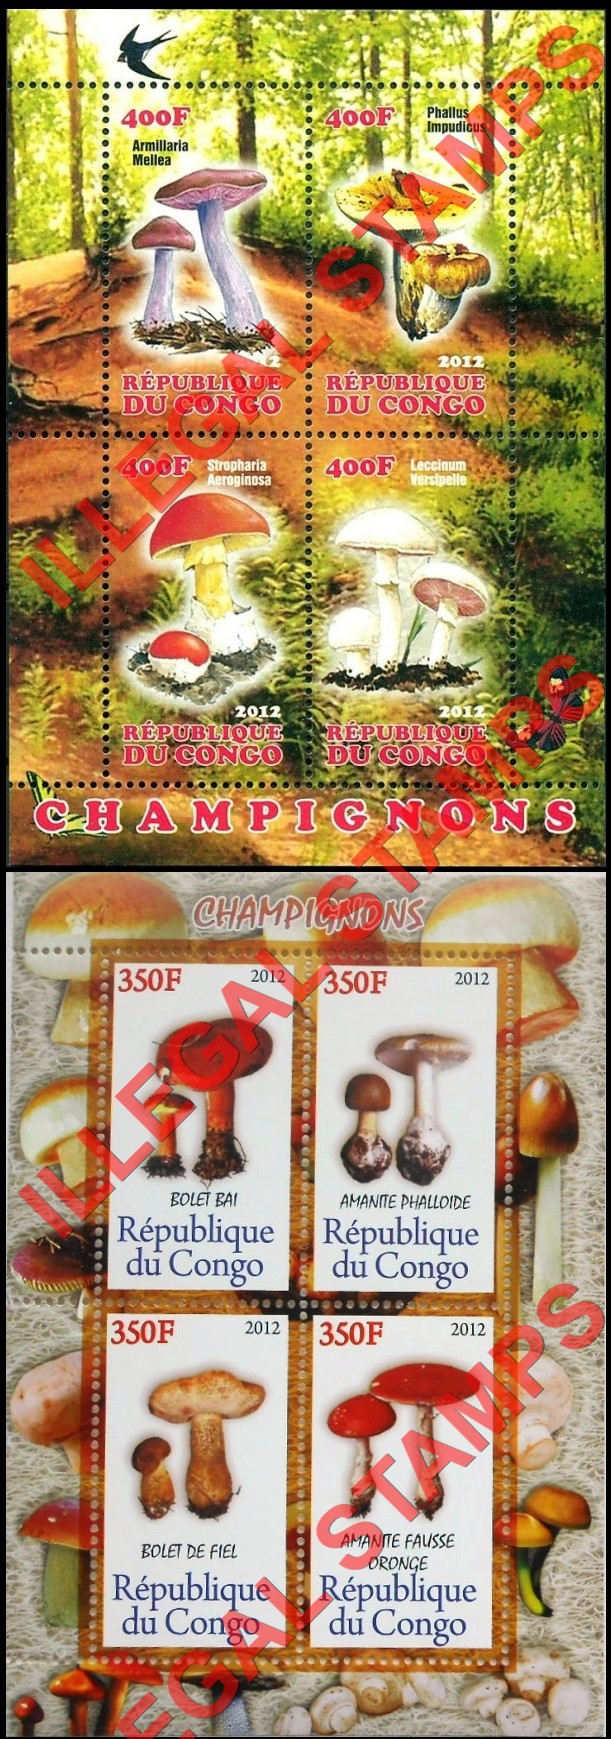 Congo Republic 2012 Mushrooms Illegal Stamp Souvenir Sheets of 4 (Part 2)